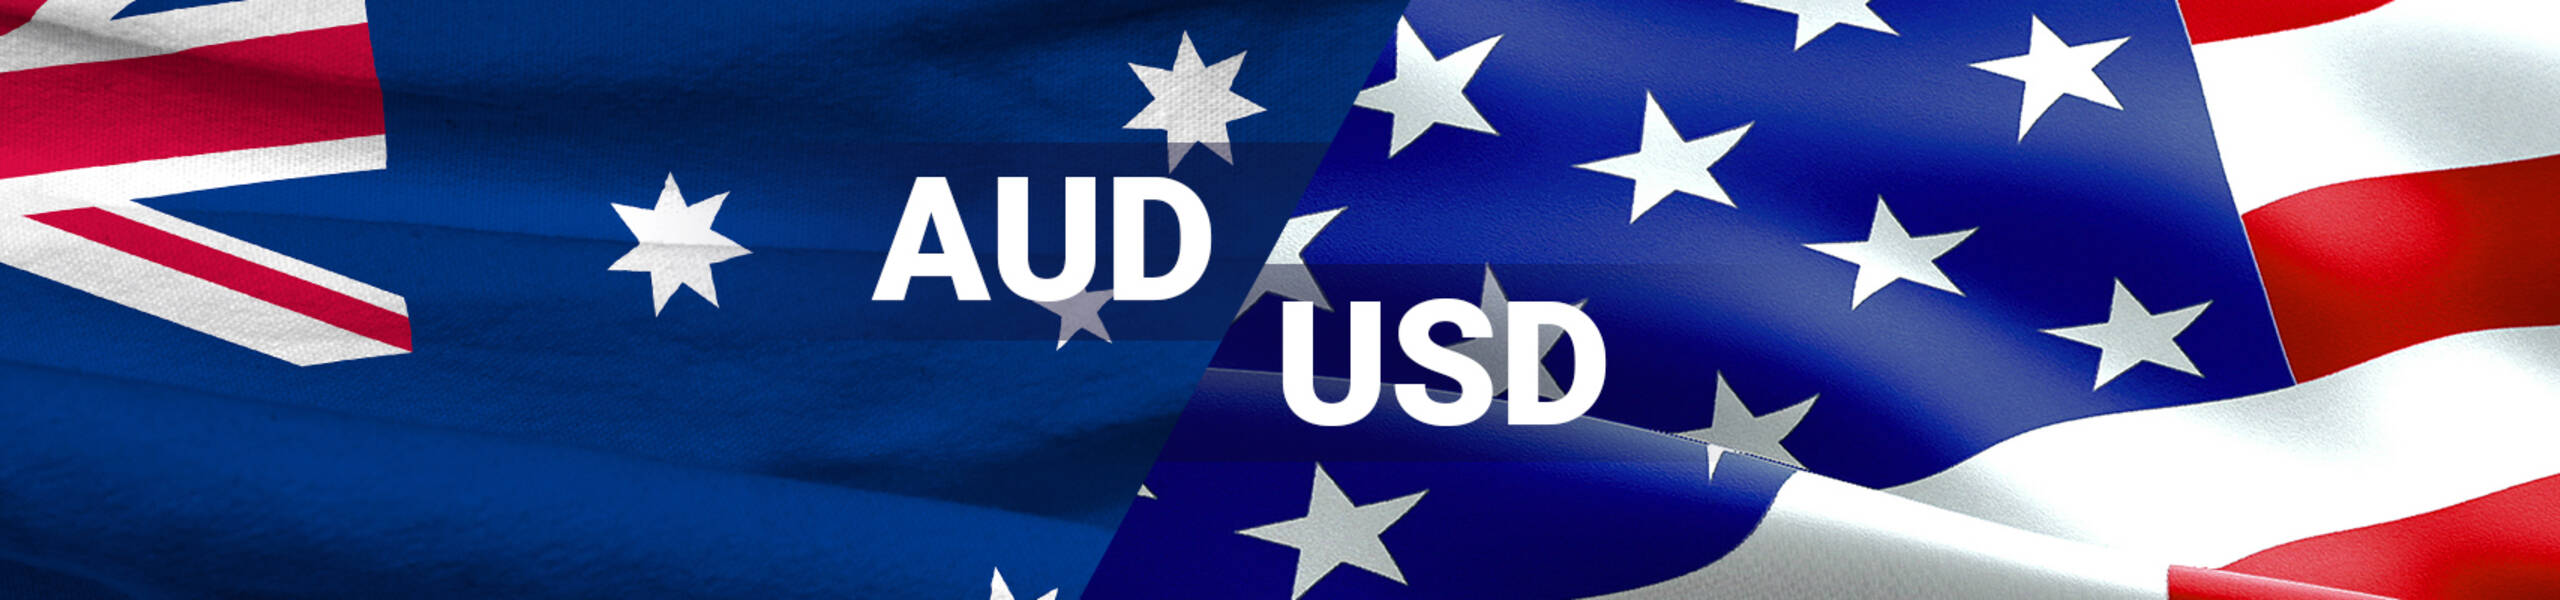 AUD/USD close to reach a demand zone